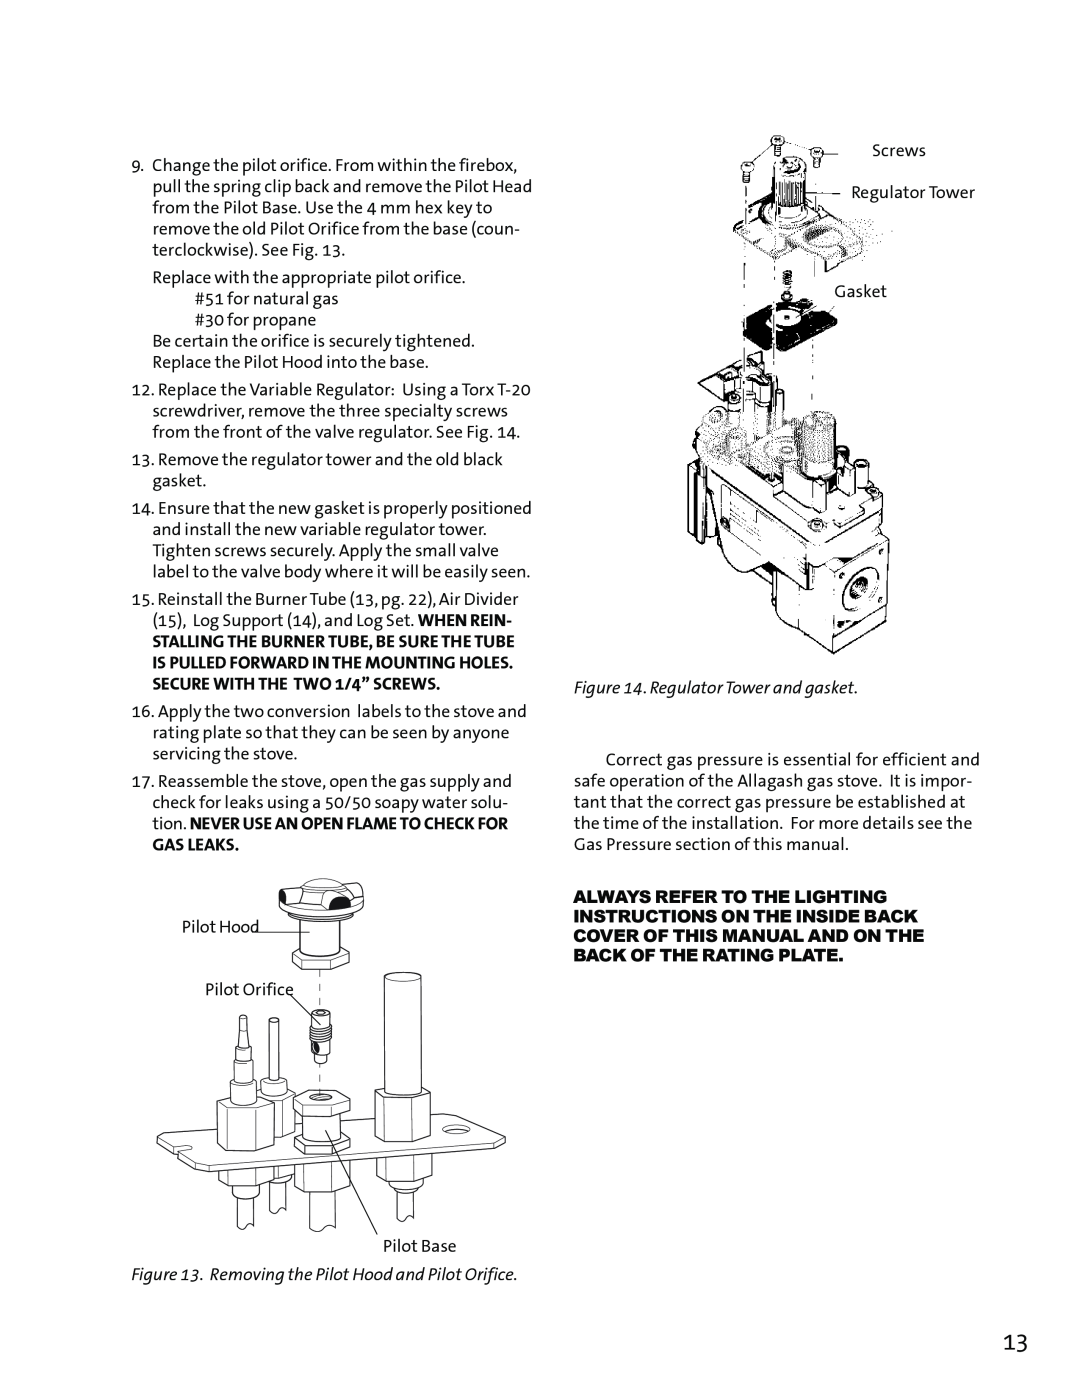 Jotul GF3 DVII manual Gas Leaks 